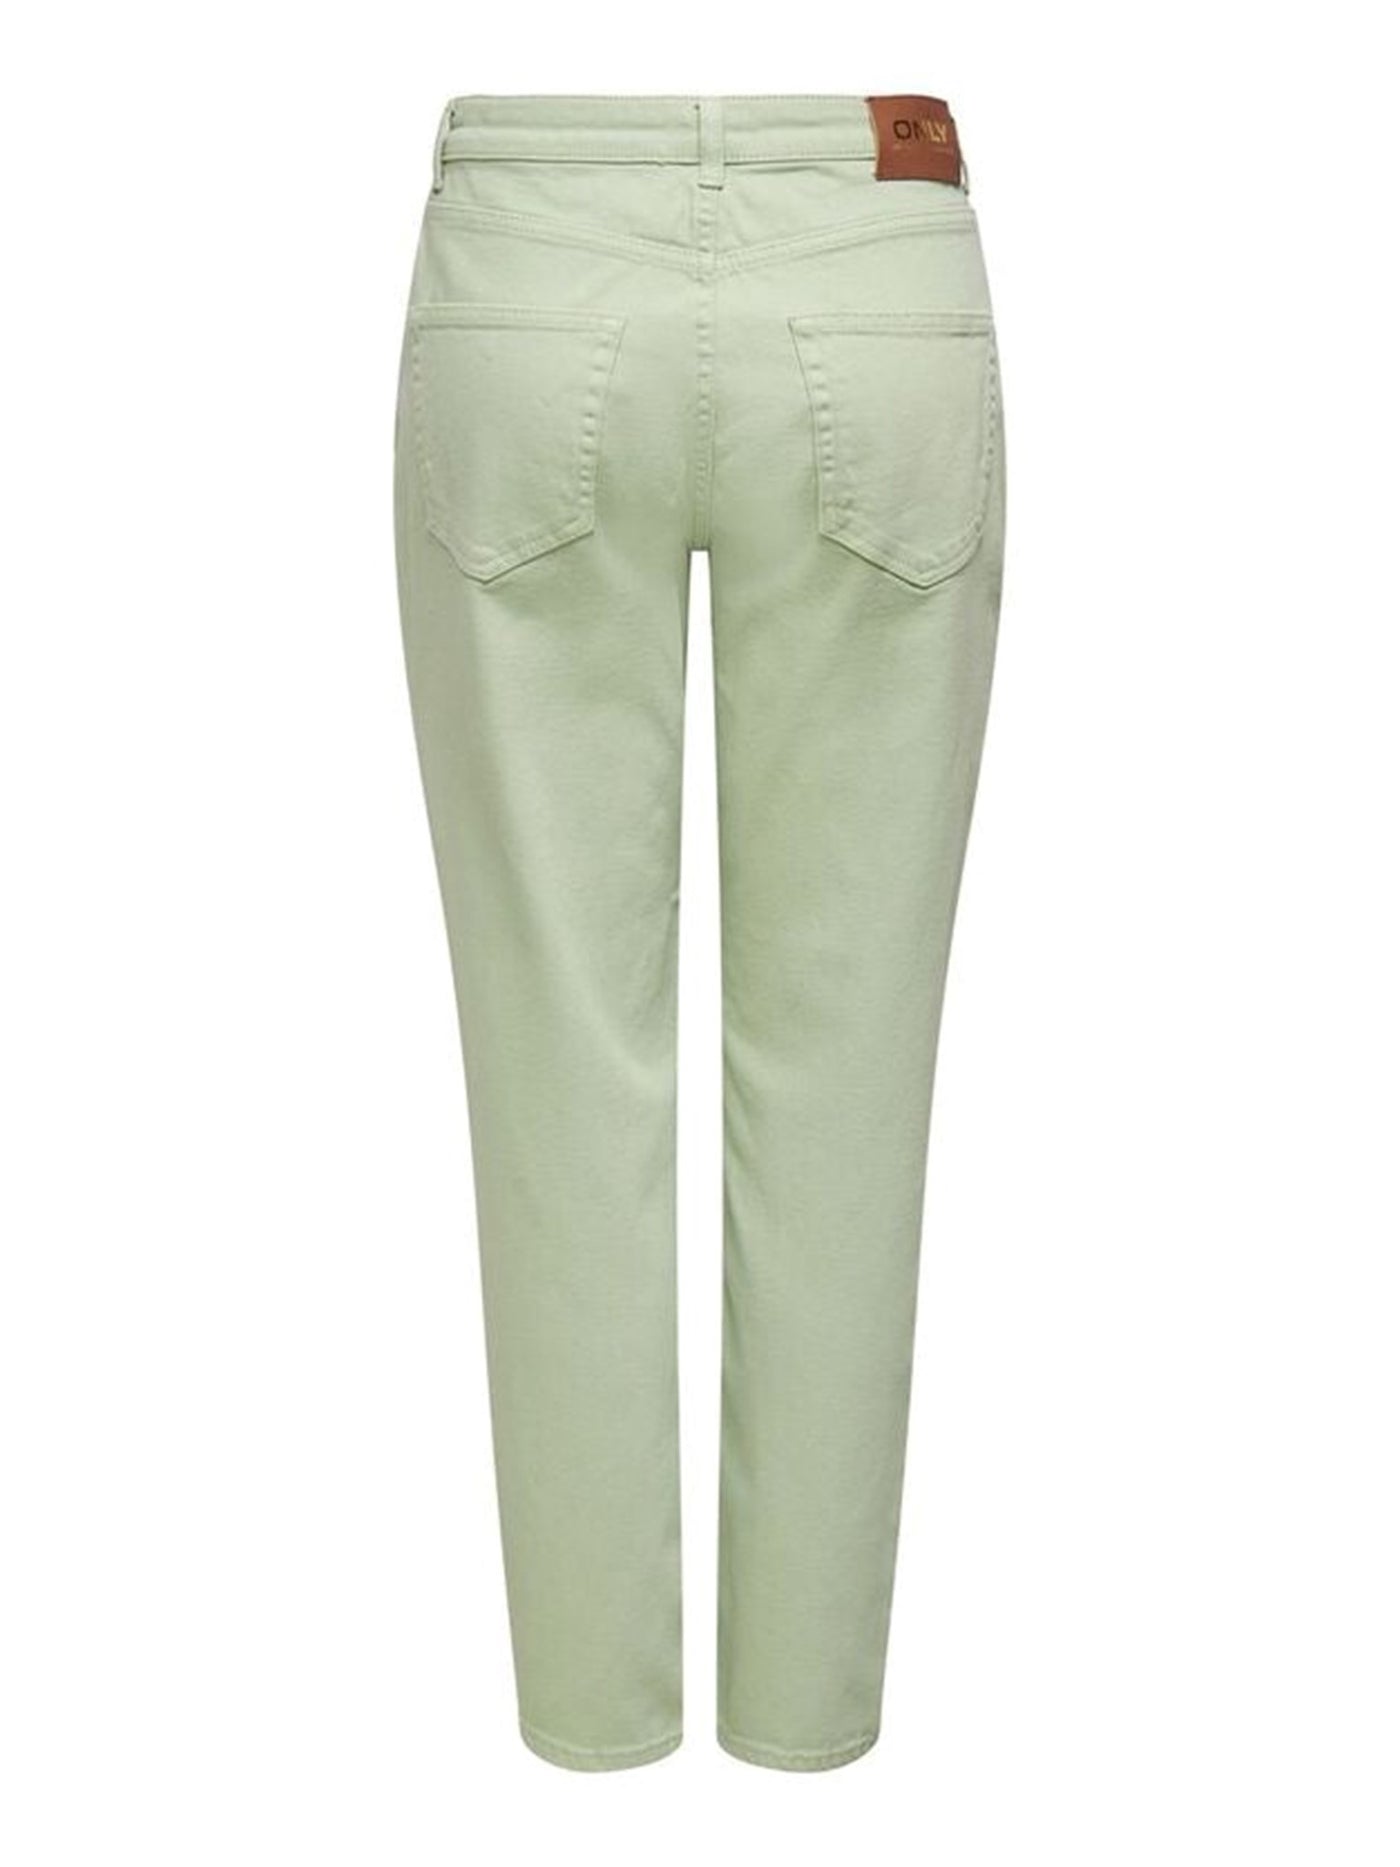 Solid Colour Mum Jeans - Desert Saga - ONLY - Green 2